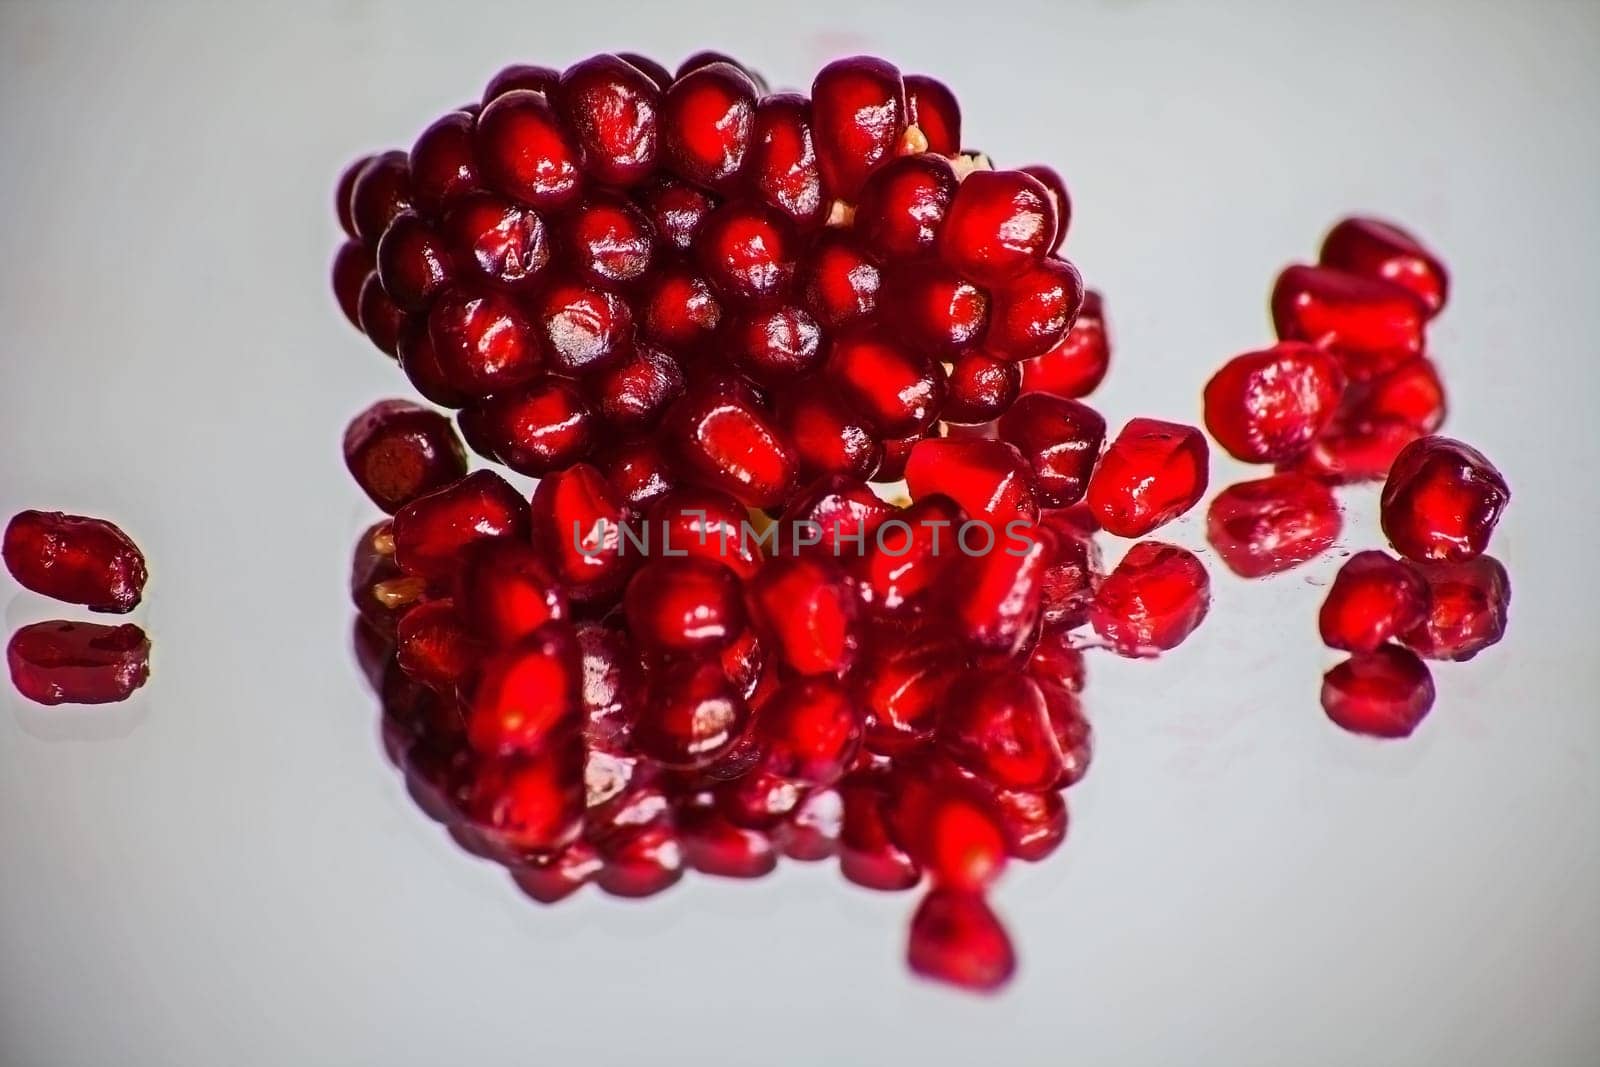 Ripe Pomegranate seeds 10602 by kobus_peche